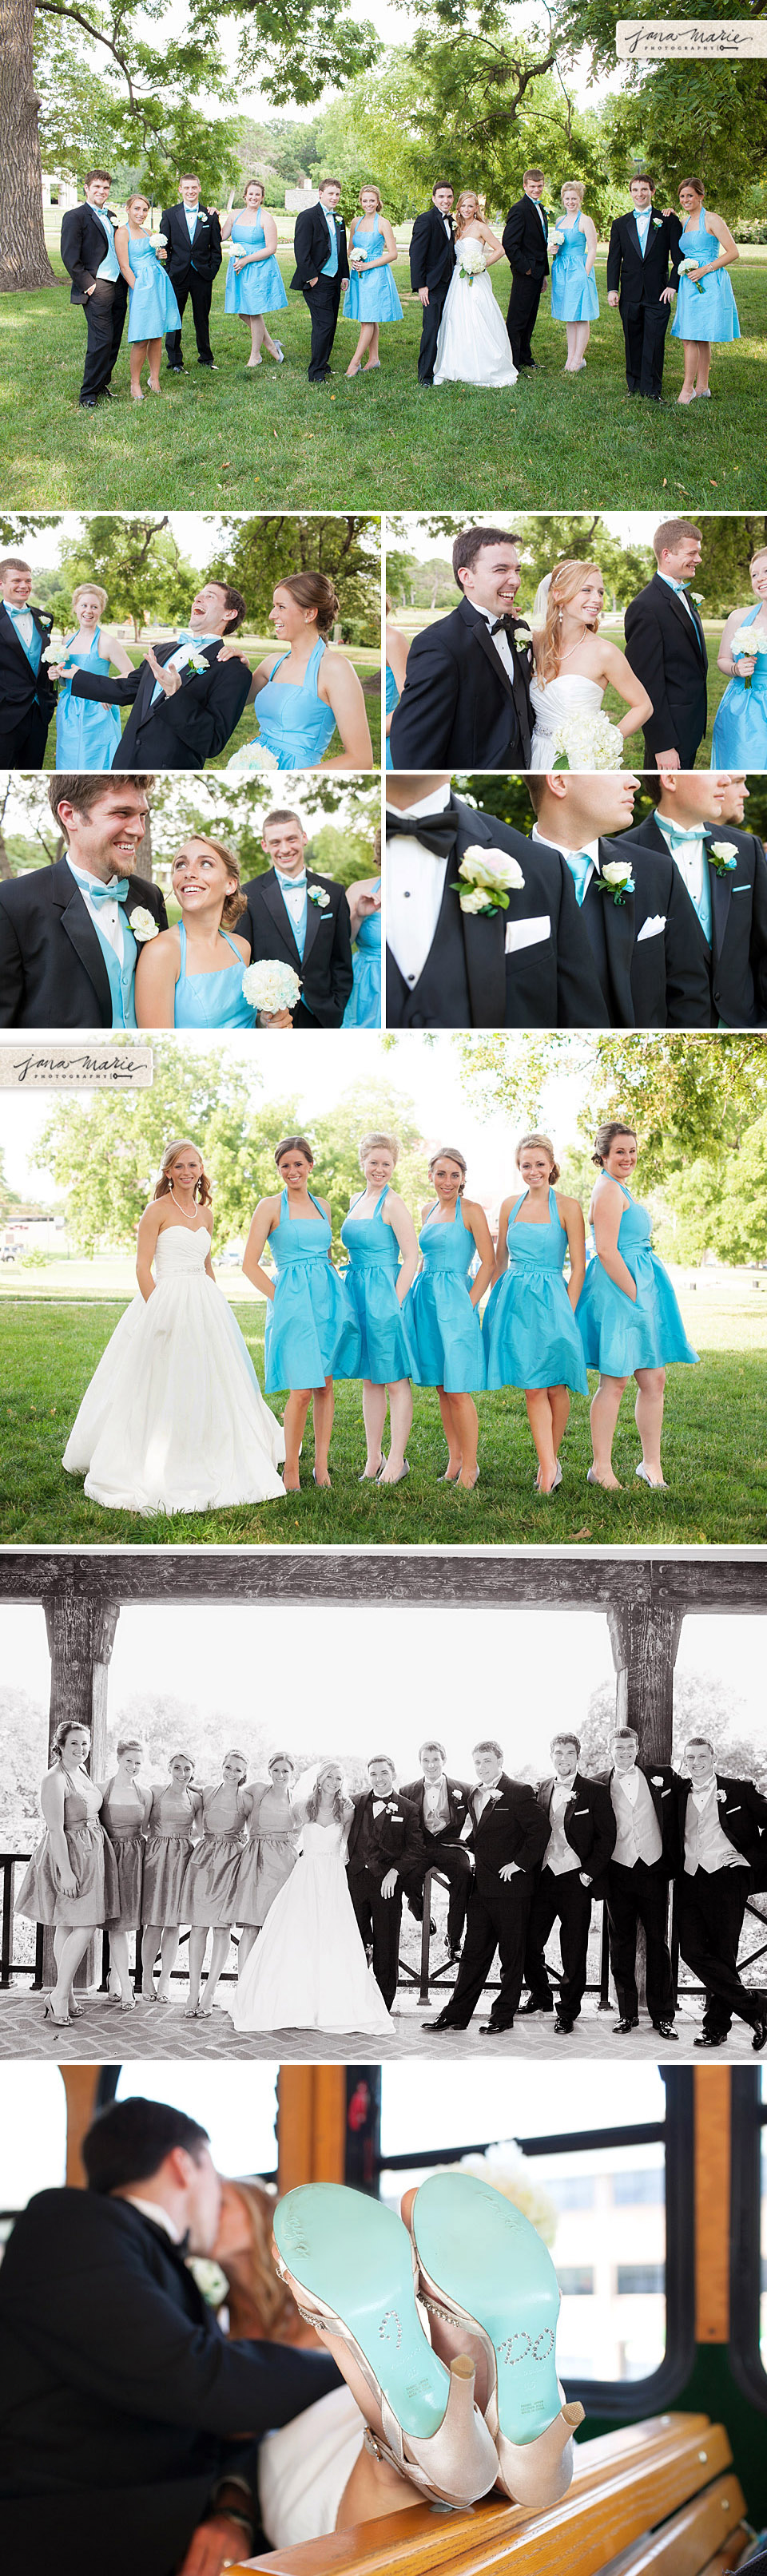 pocket dresses for bridesmaids, fun weddings, outdoor photography, Kansas City portraits, Jana